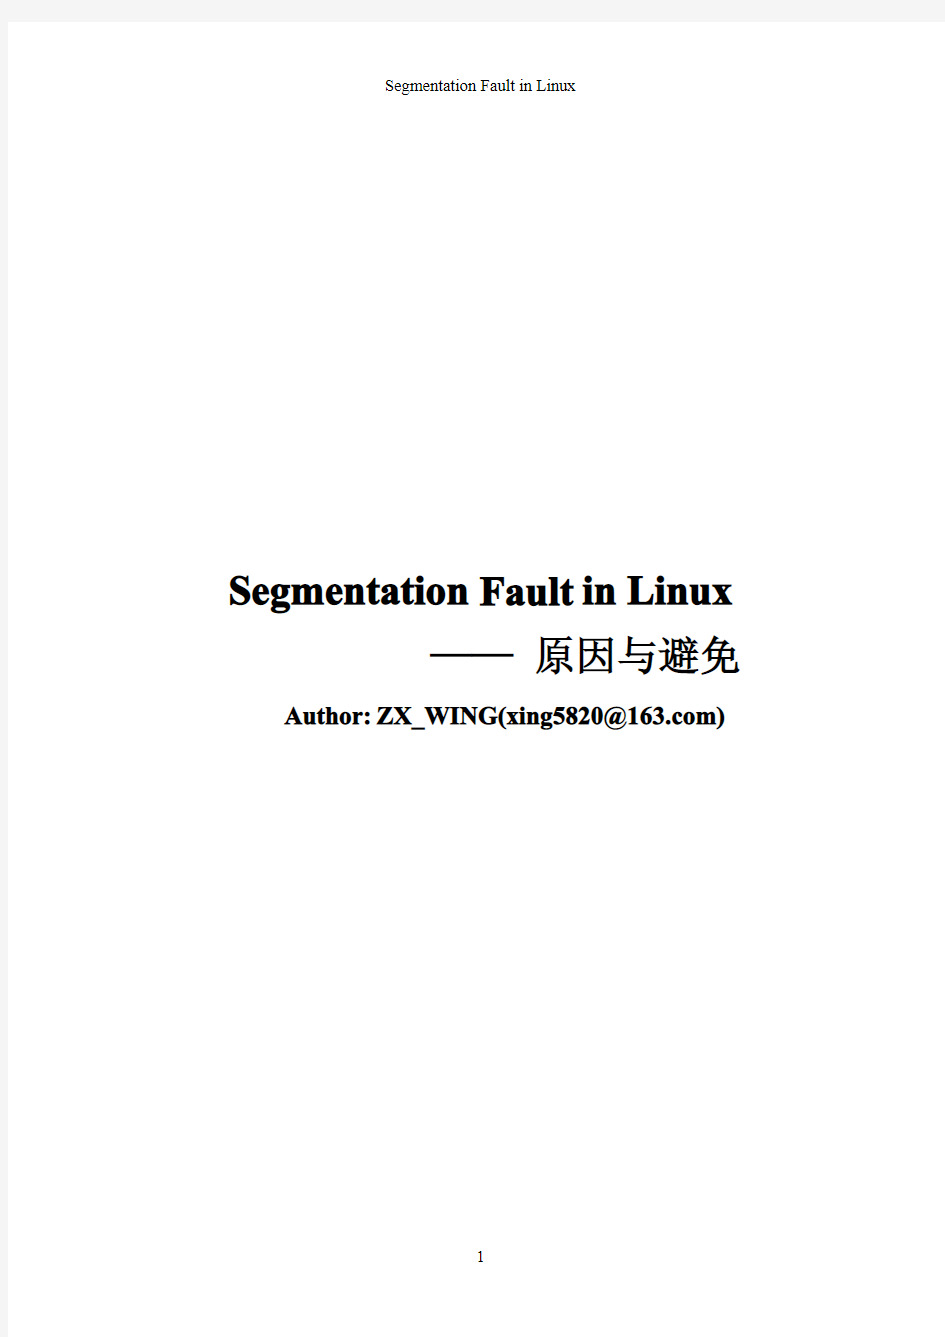 Segmentation fault in linux